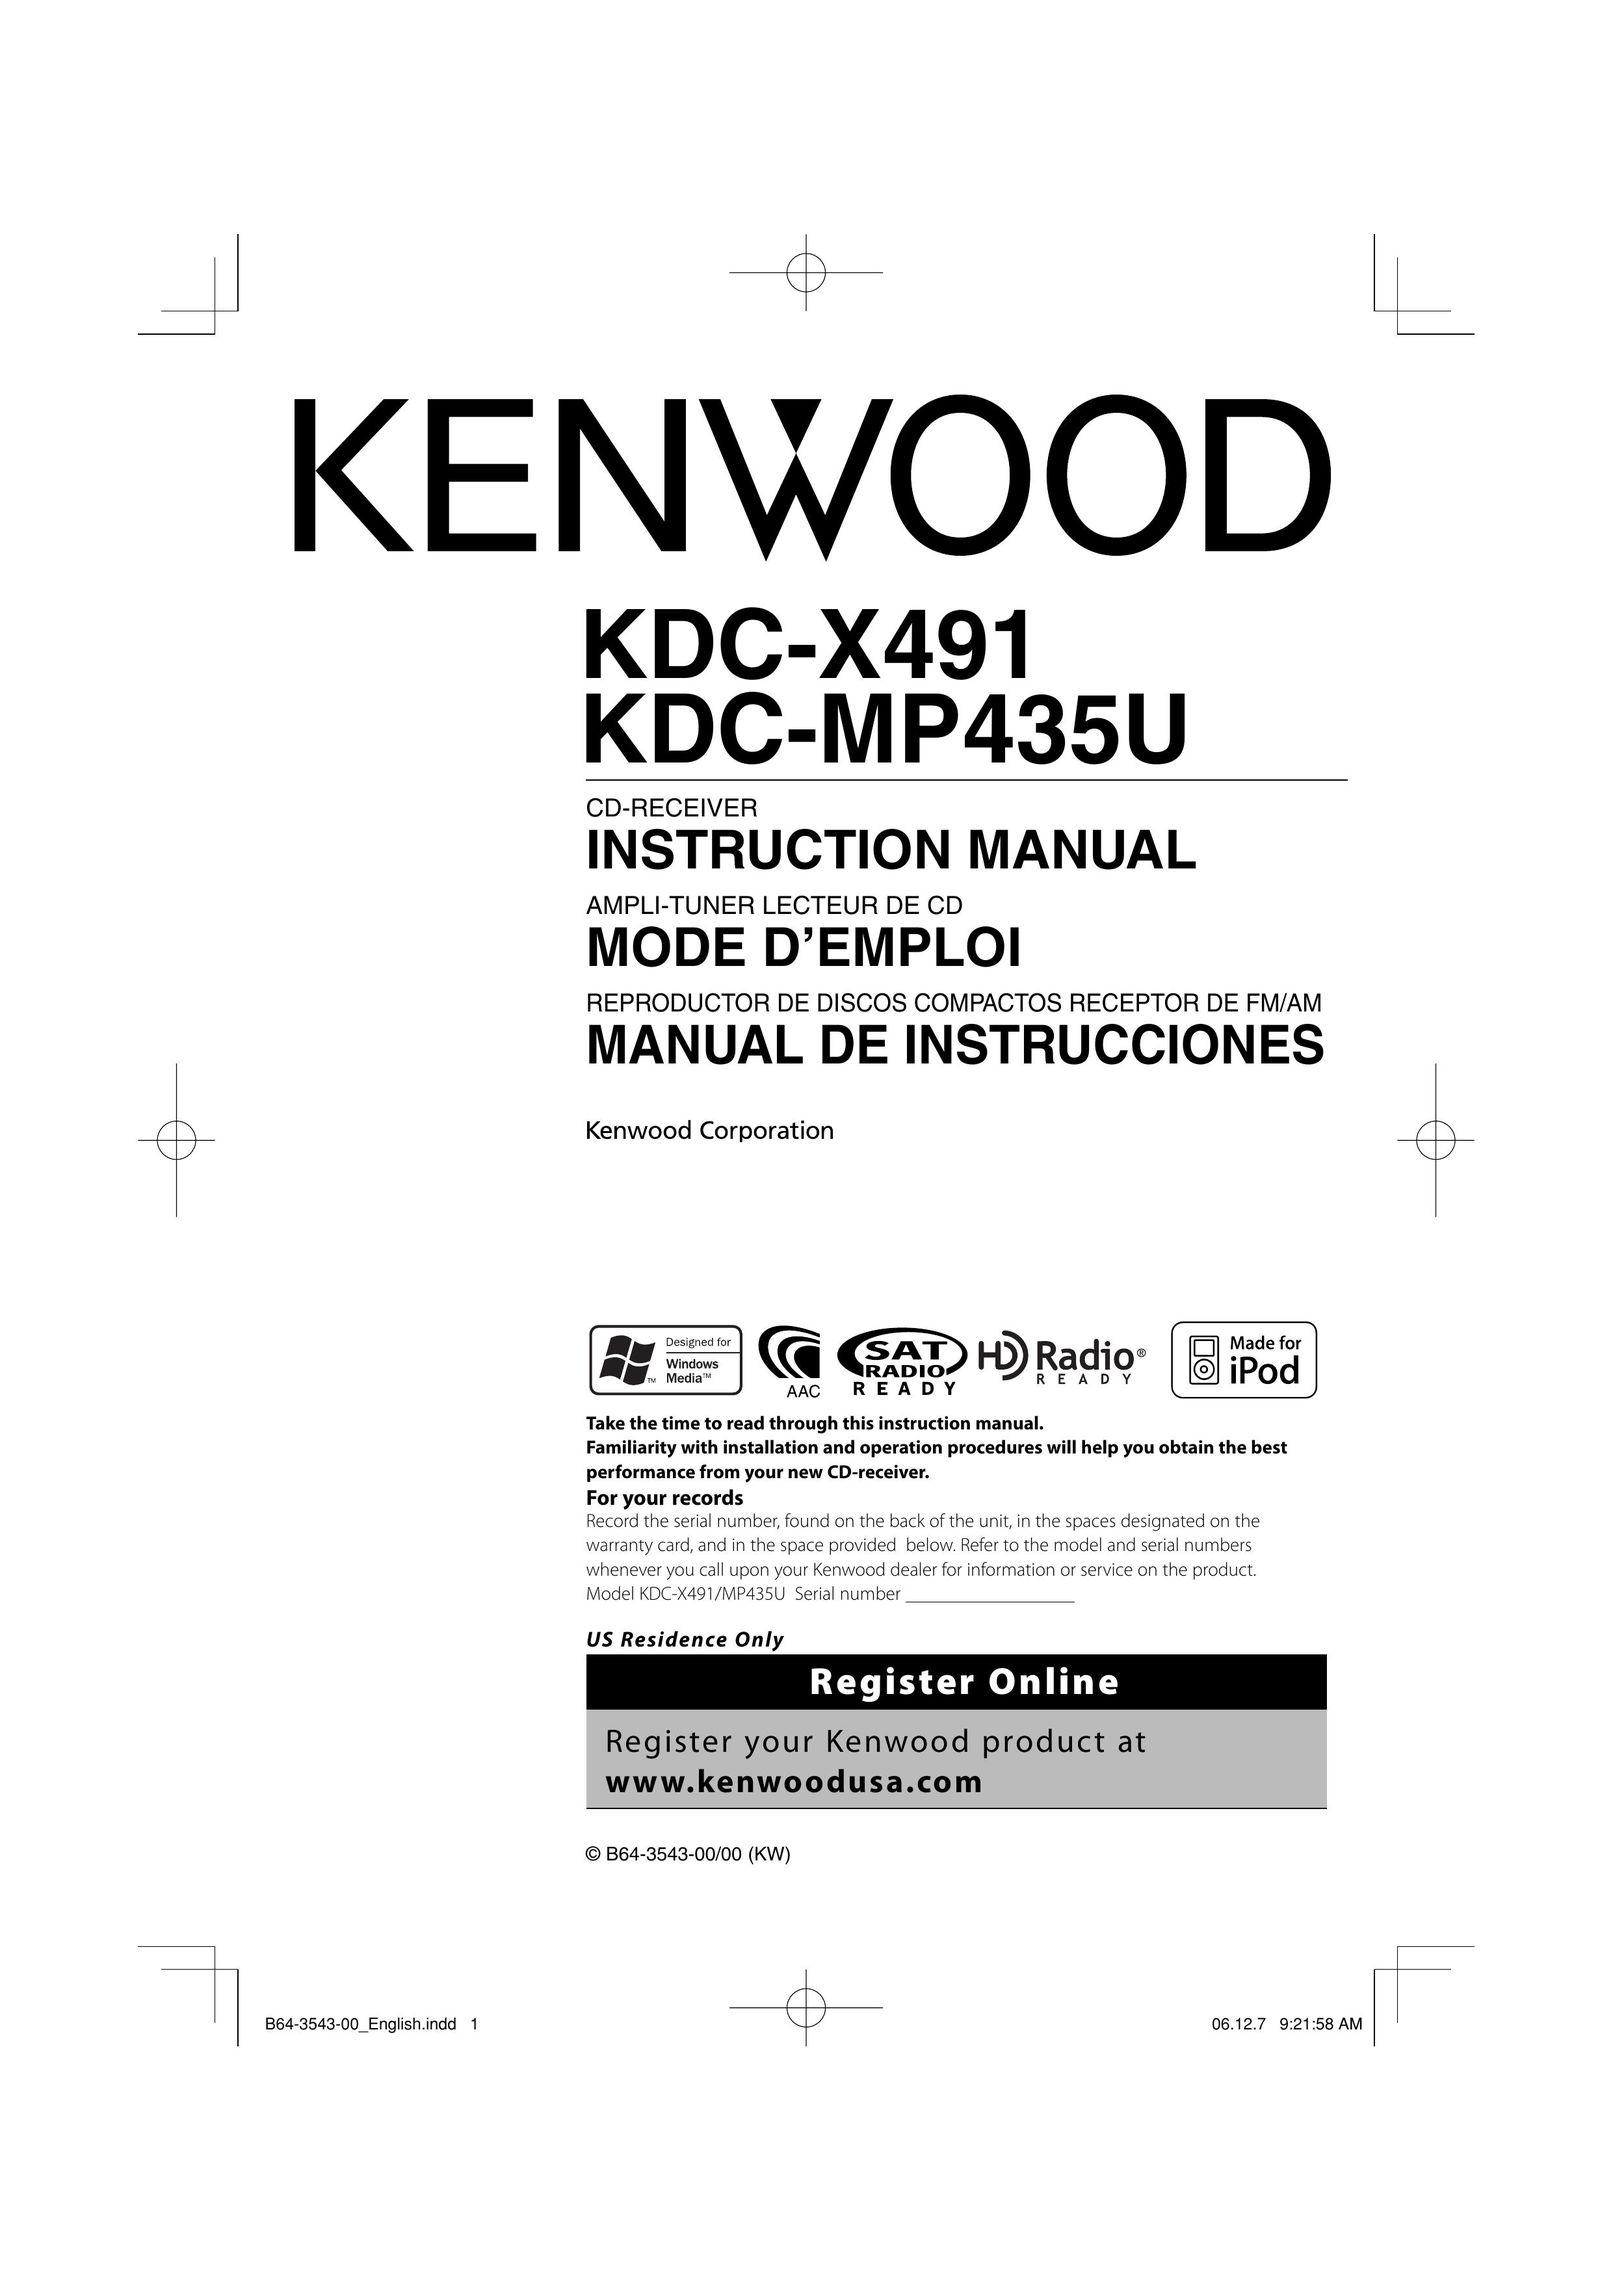 Kenwood KDC-MP435U Coffeemaker User Manual